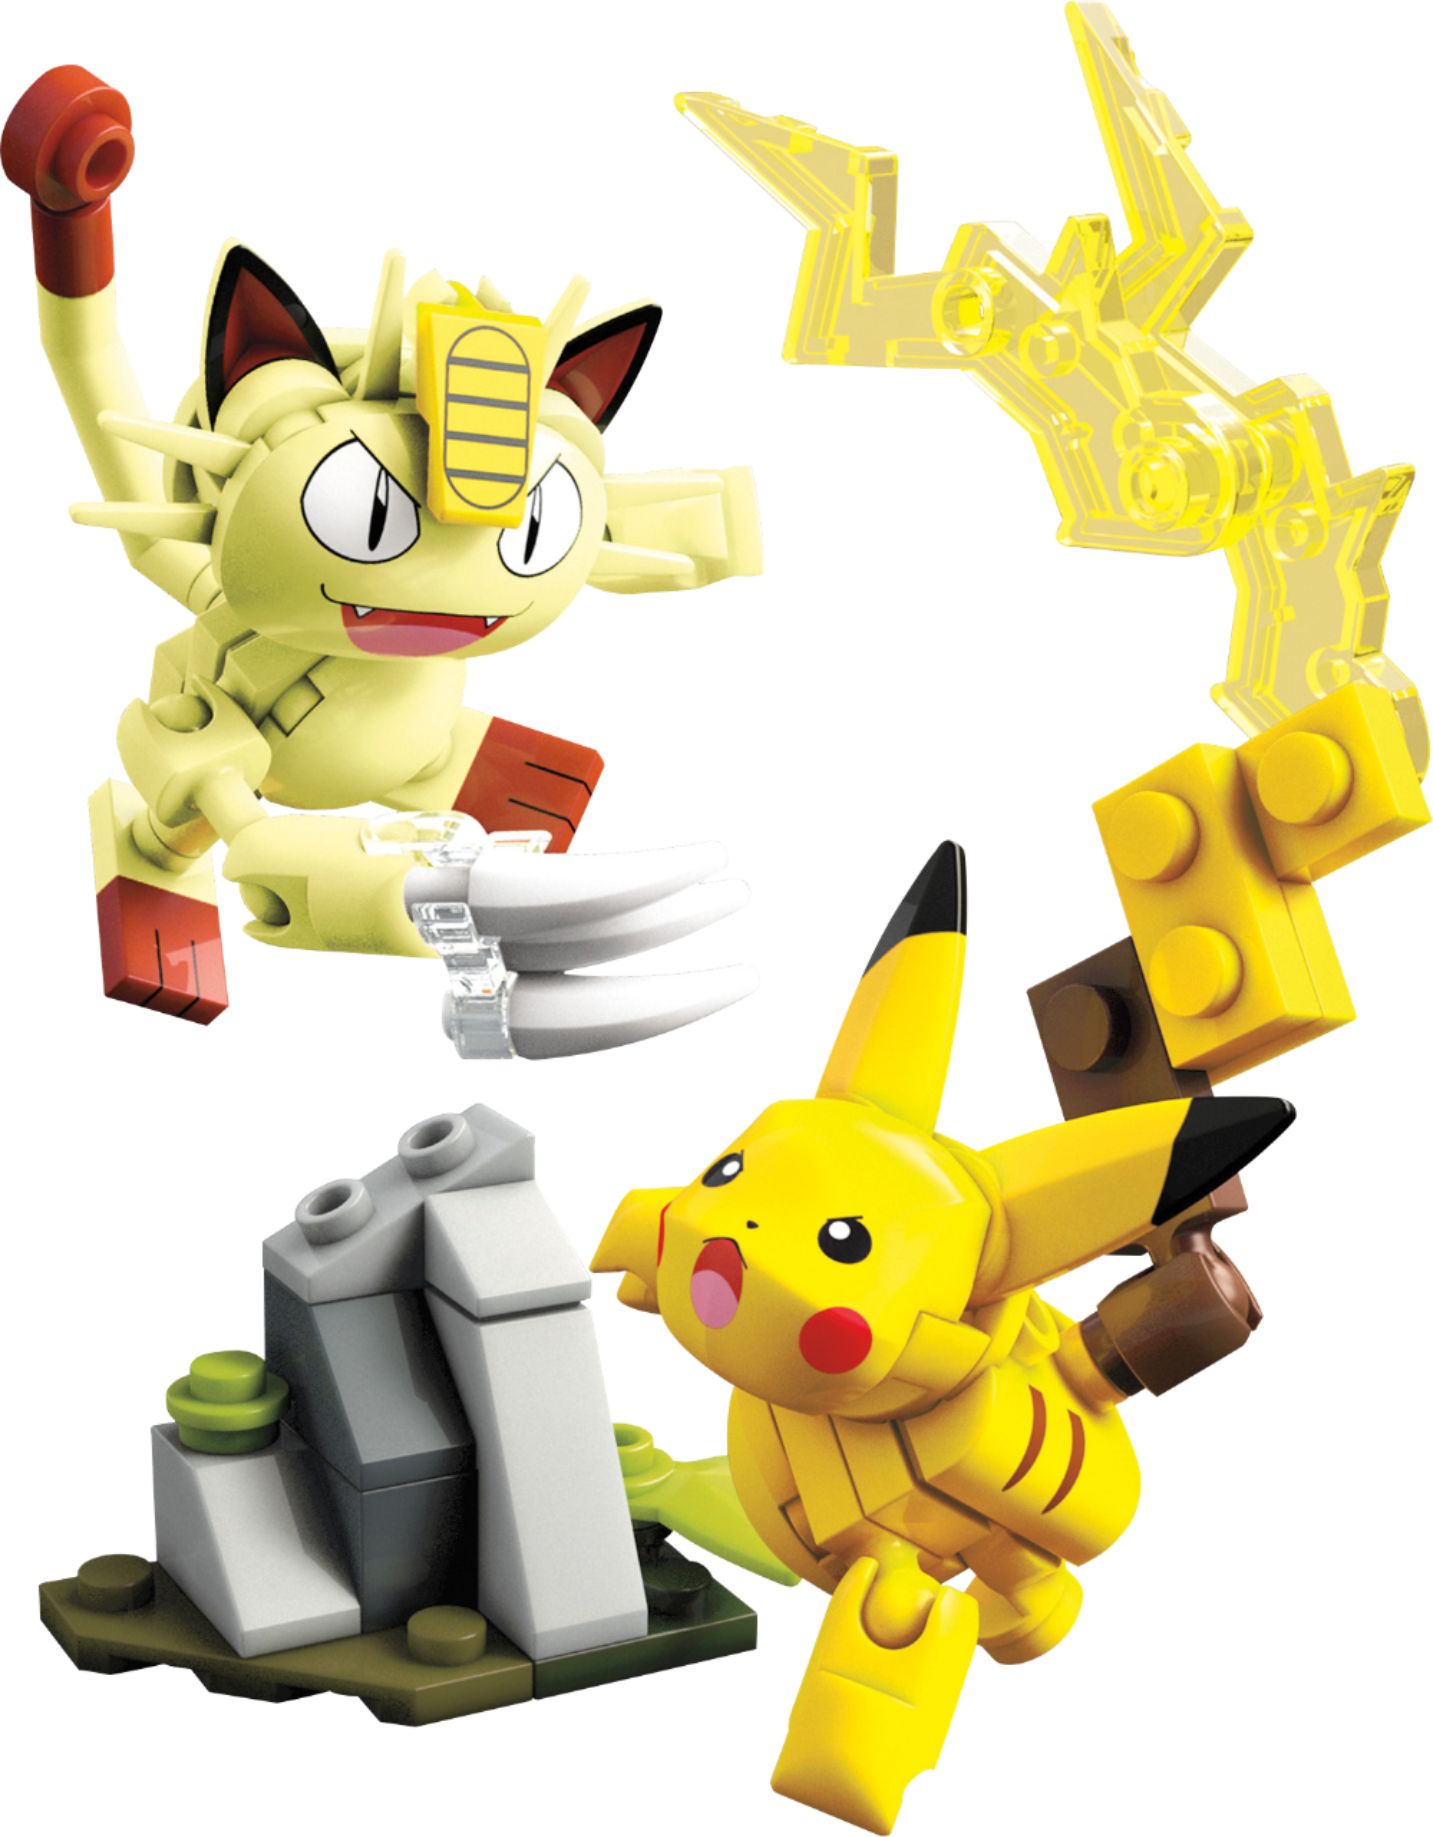 mega construx pokemon sets